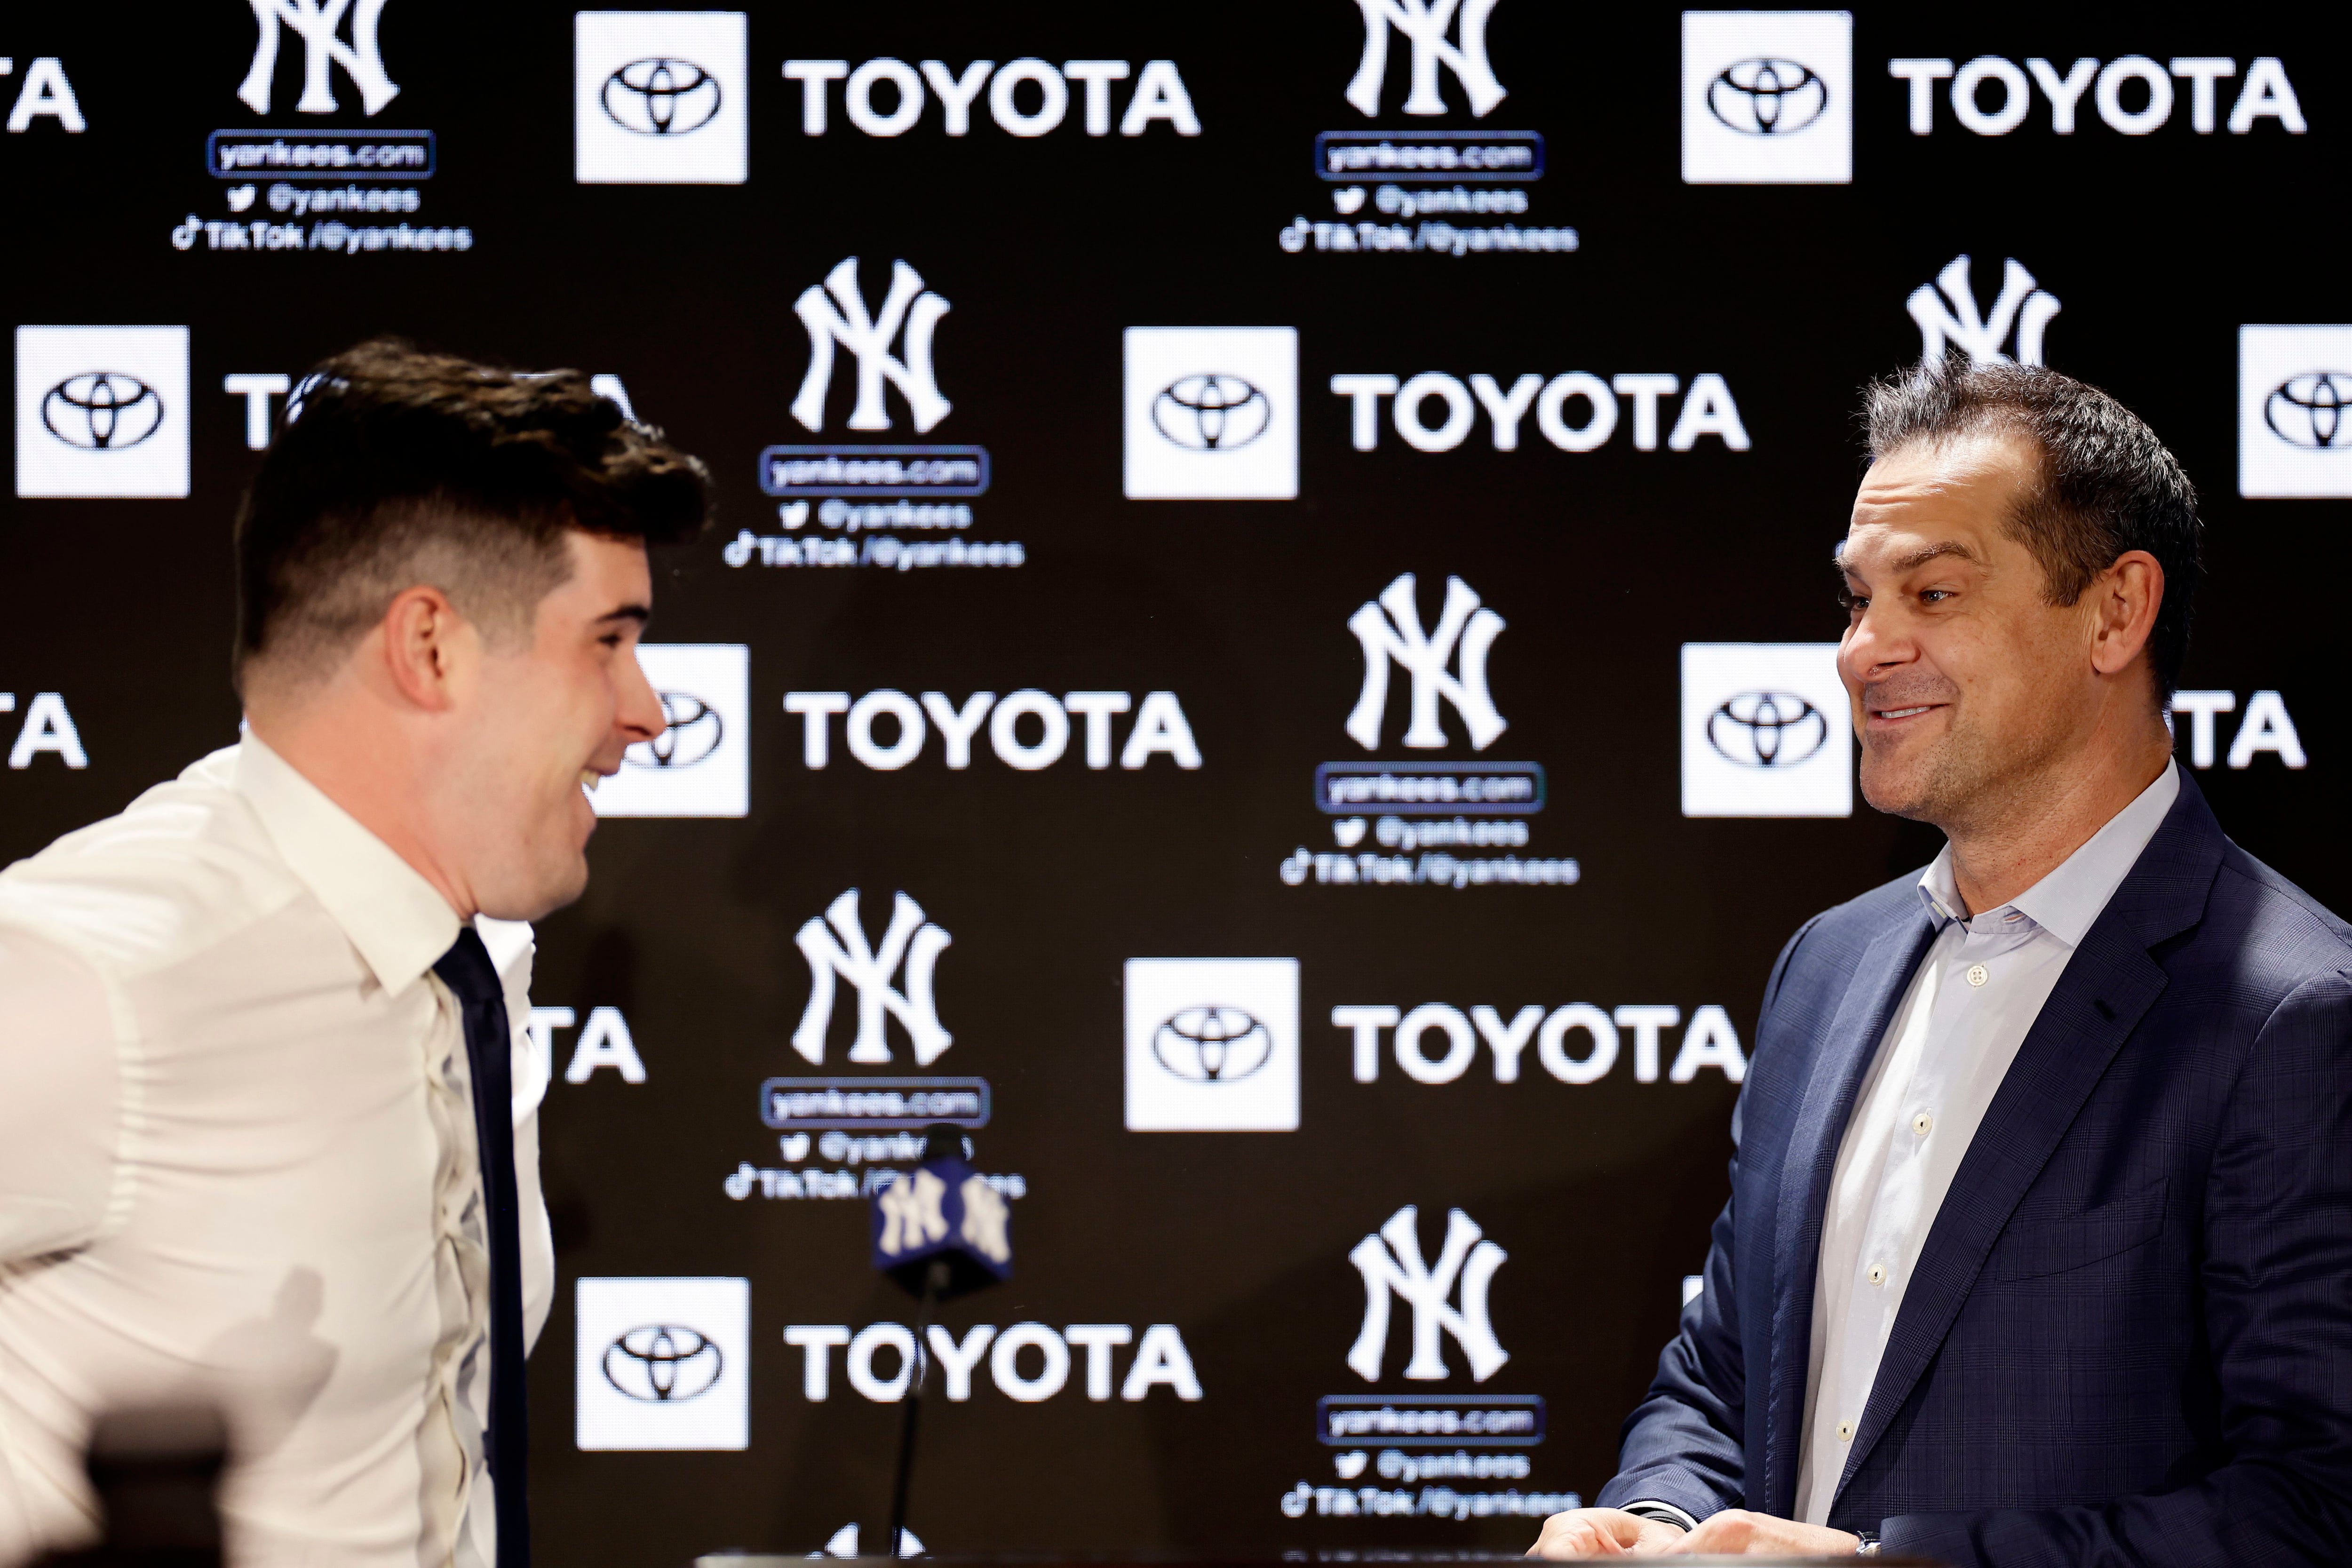 Carlos Rodón, newly shaved, puts on Yankees pinstripes - NBC Sports